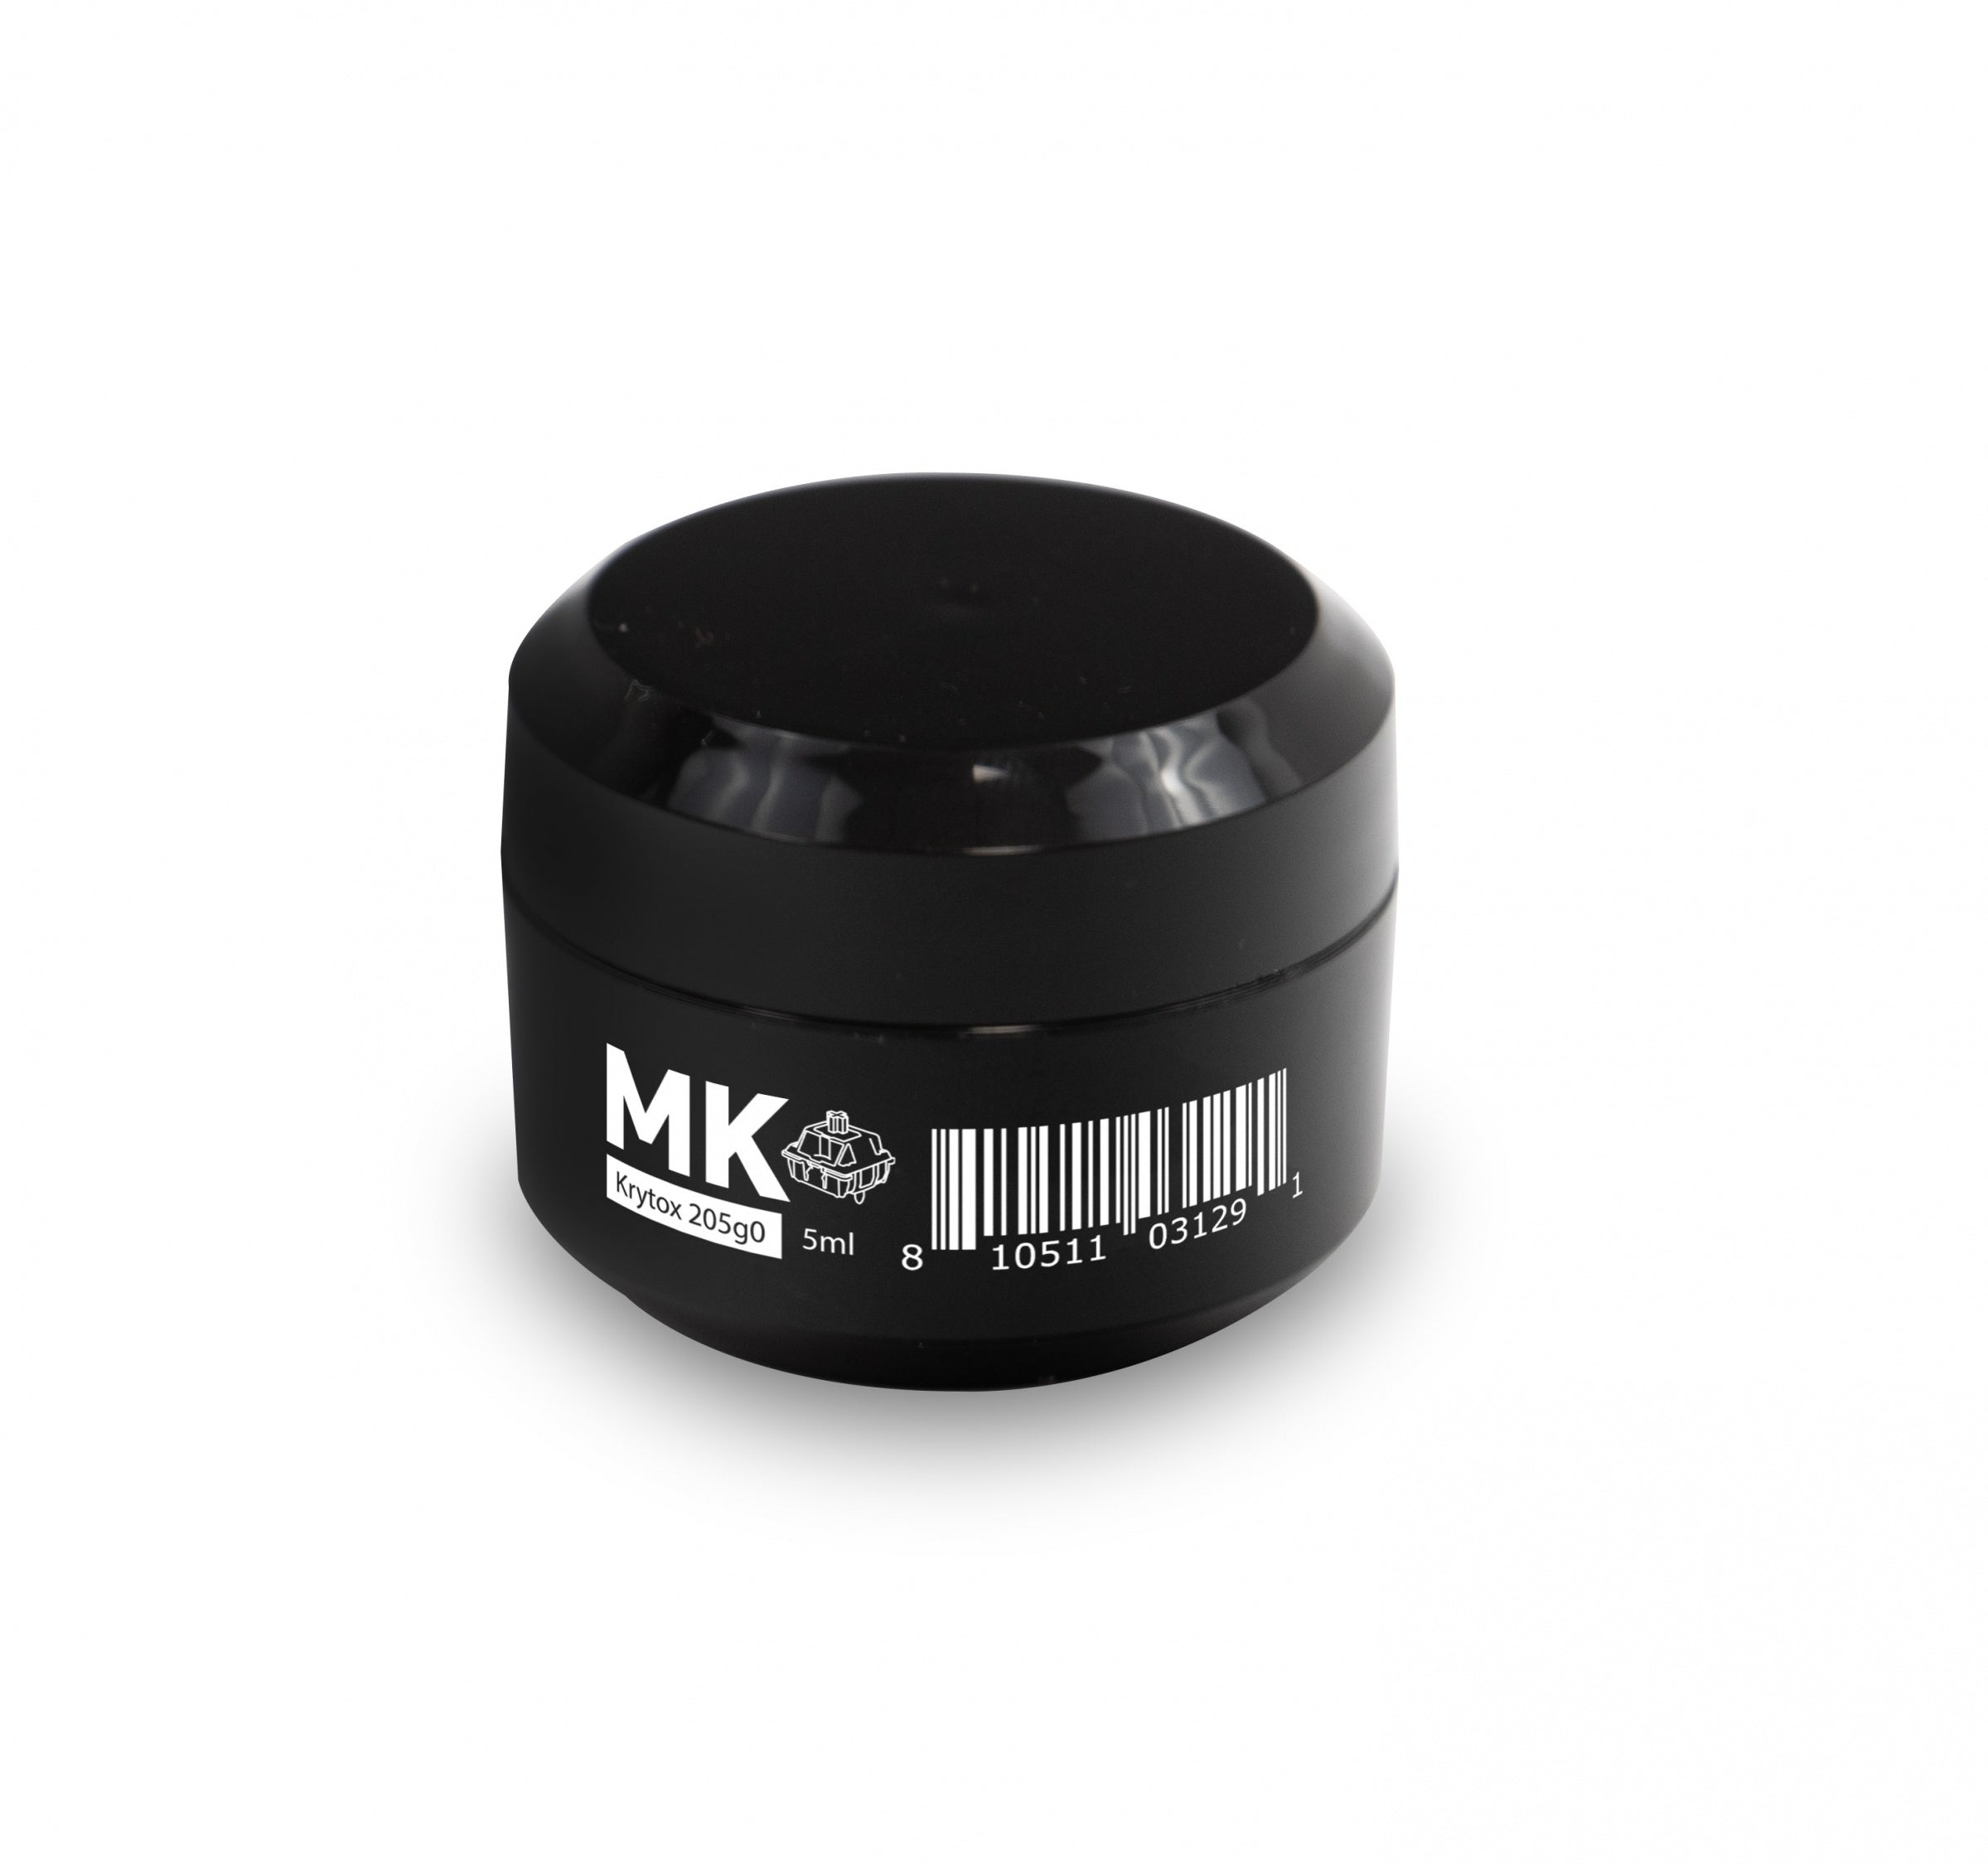 MK Krytox 205g0 Lube 5ml MKDV8KOKU7 |36659|